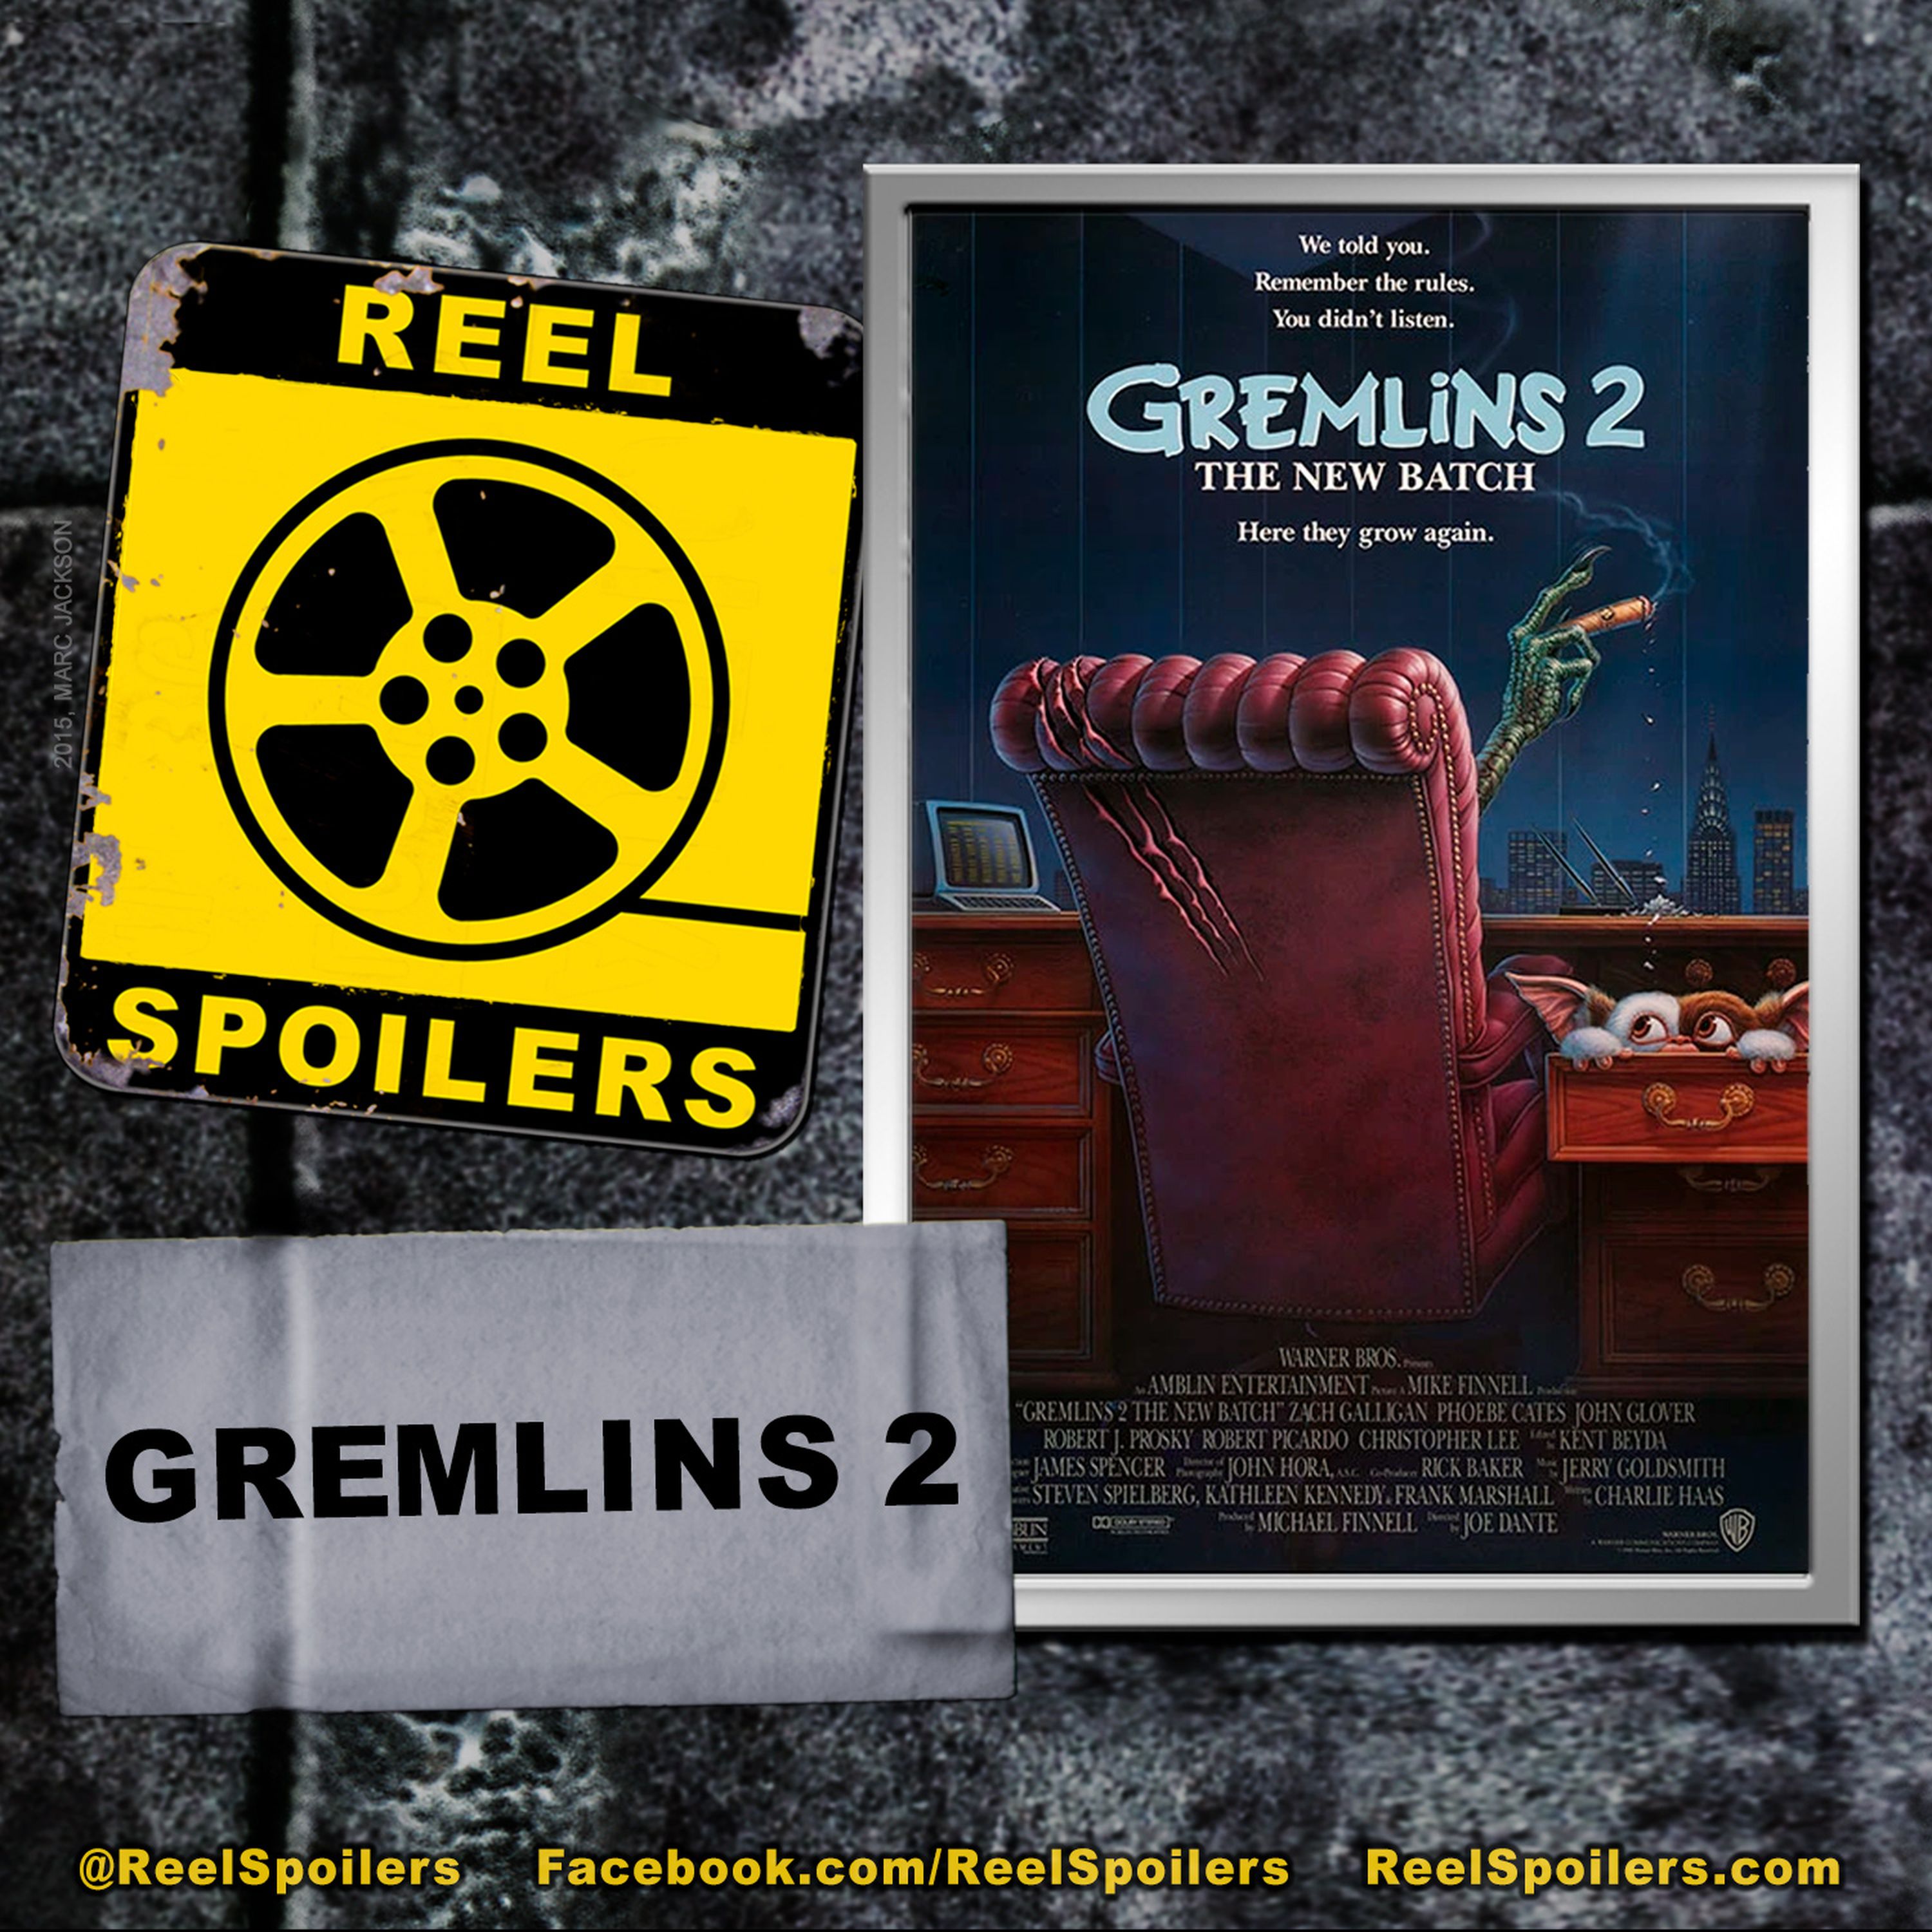 GREMLINS 2 Starring Zach Galligan, Phoebe Cates, John Glover Image